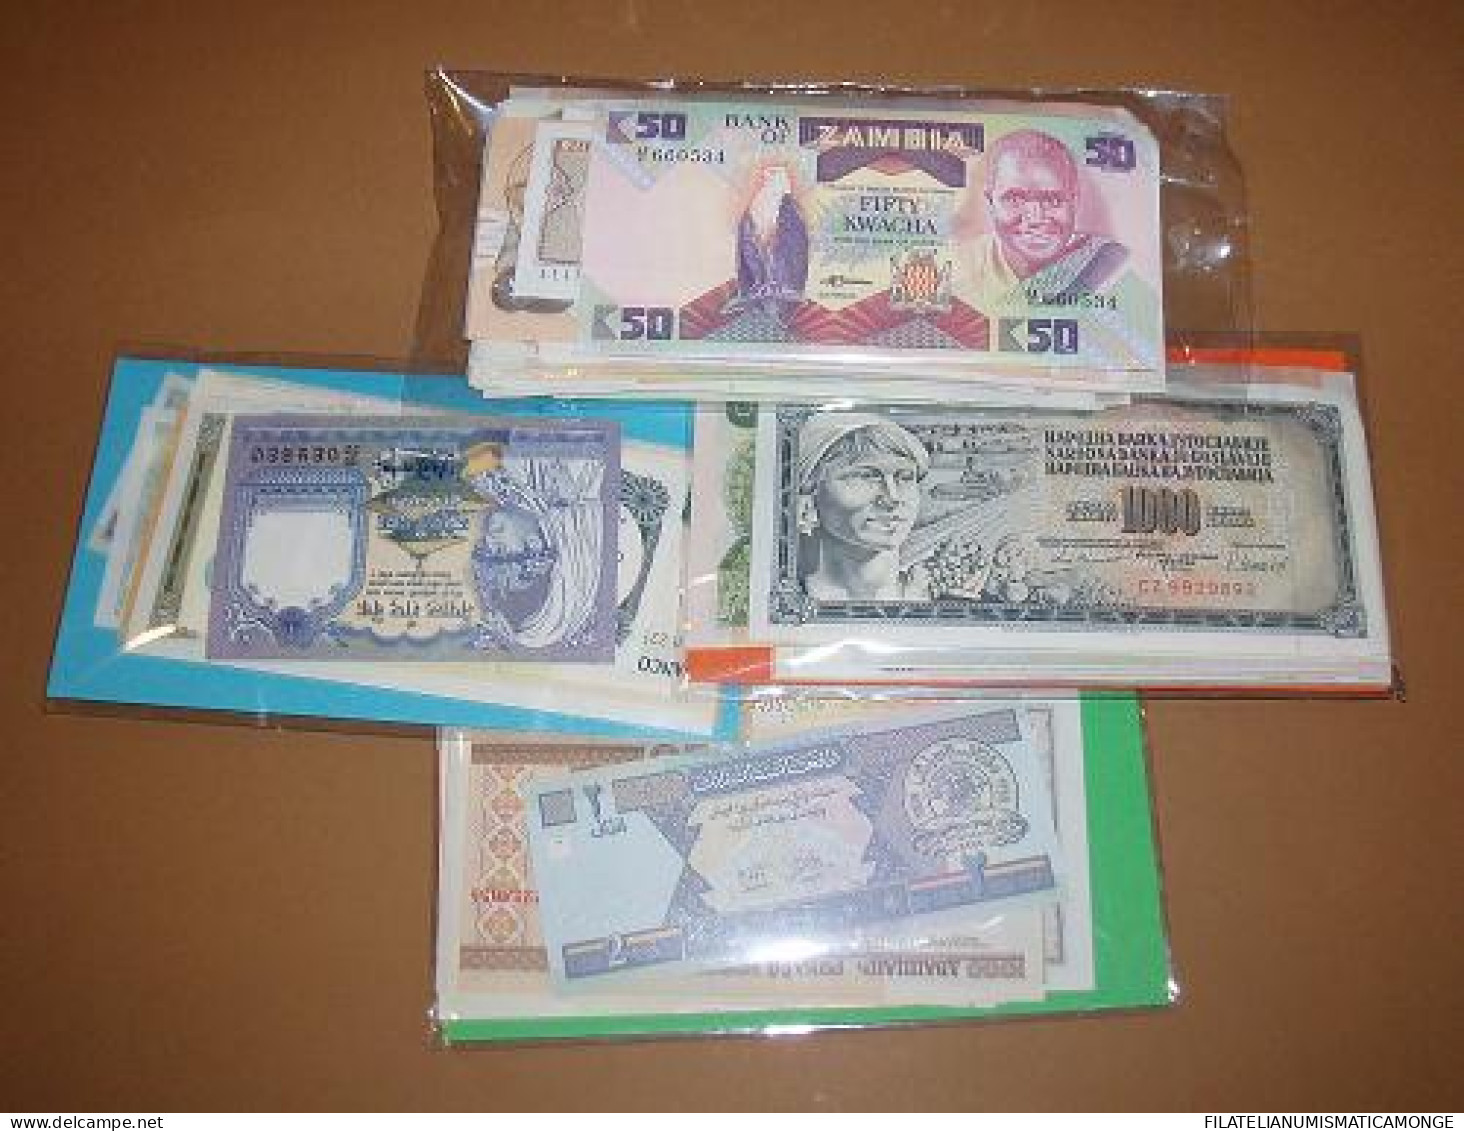  Offer - Lot Banknotes - Paqueteria  Mundial 150 Billetes Diferentes / Foto Gen - Kilowaar - Bankbiljetten